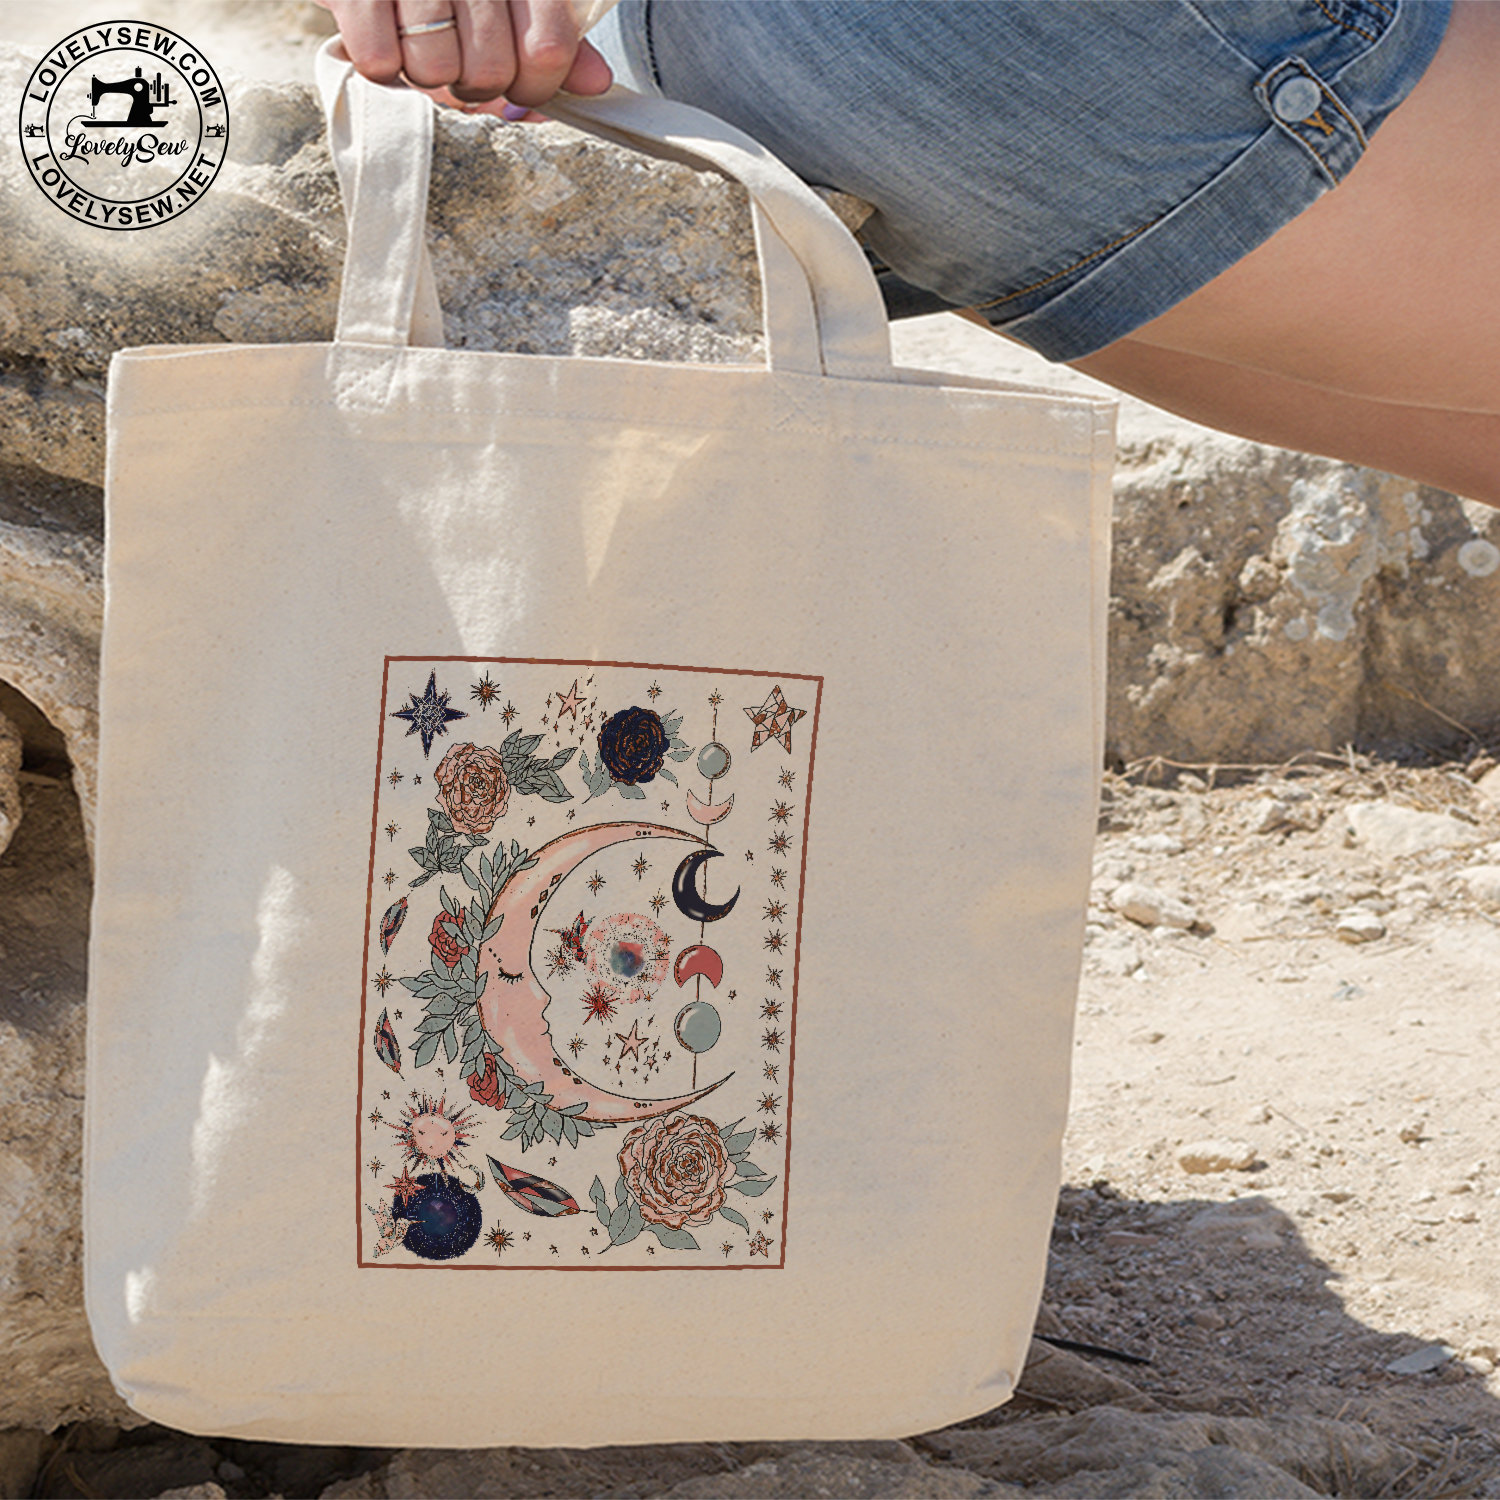 Eco Friendly Tote Bag — De La Terre a la Lune— Vintage Lunar Decor